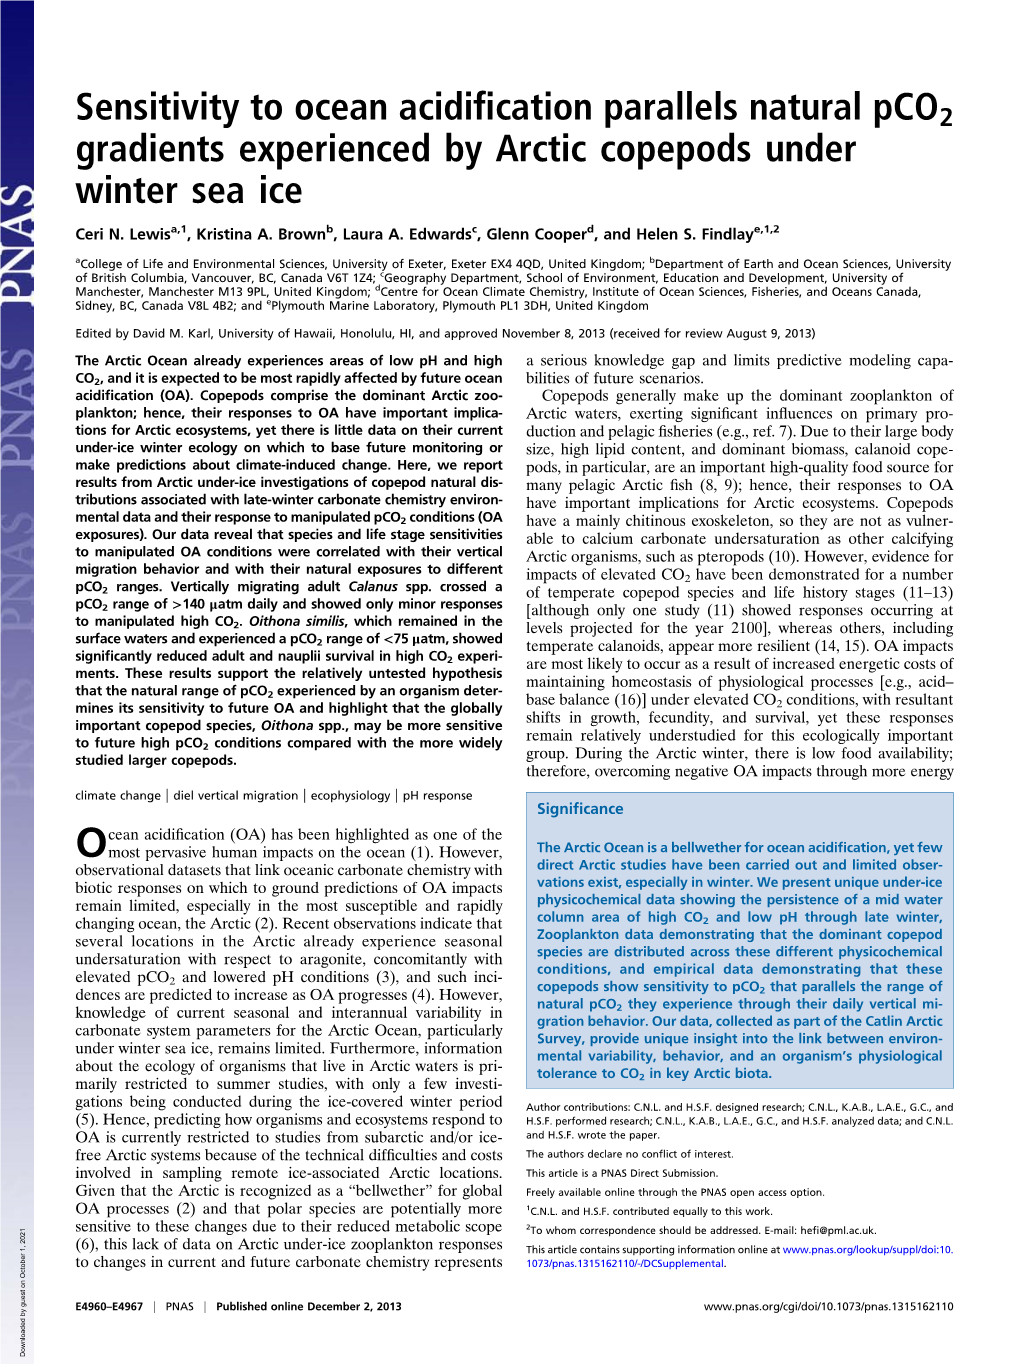 Sensitivity to Ocean Acidification Parallels Natural Pco2 Gradients